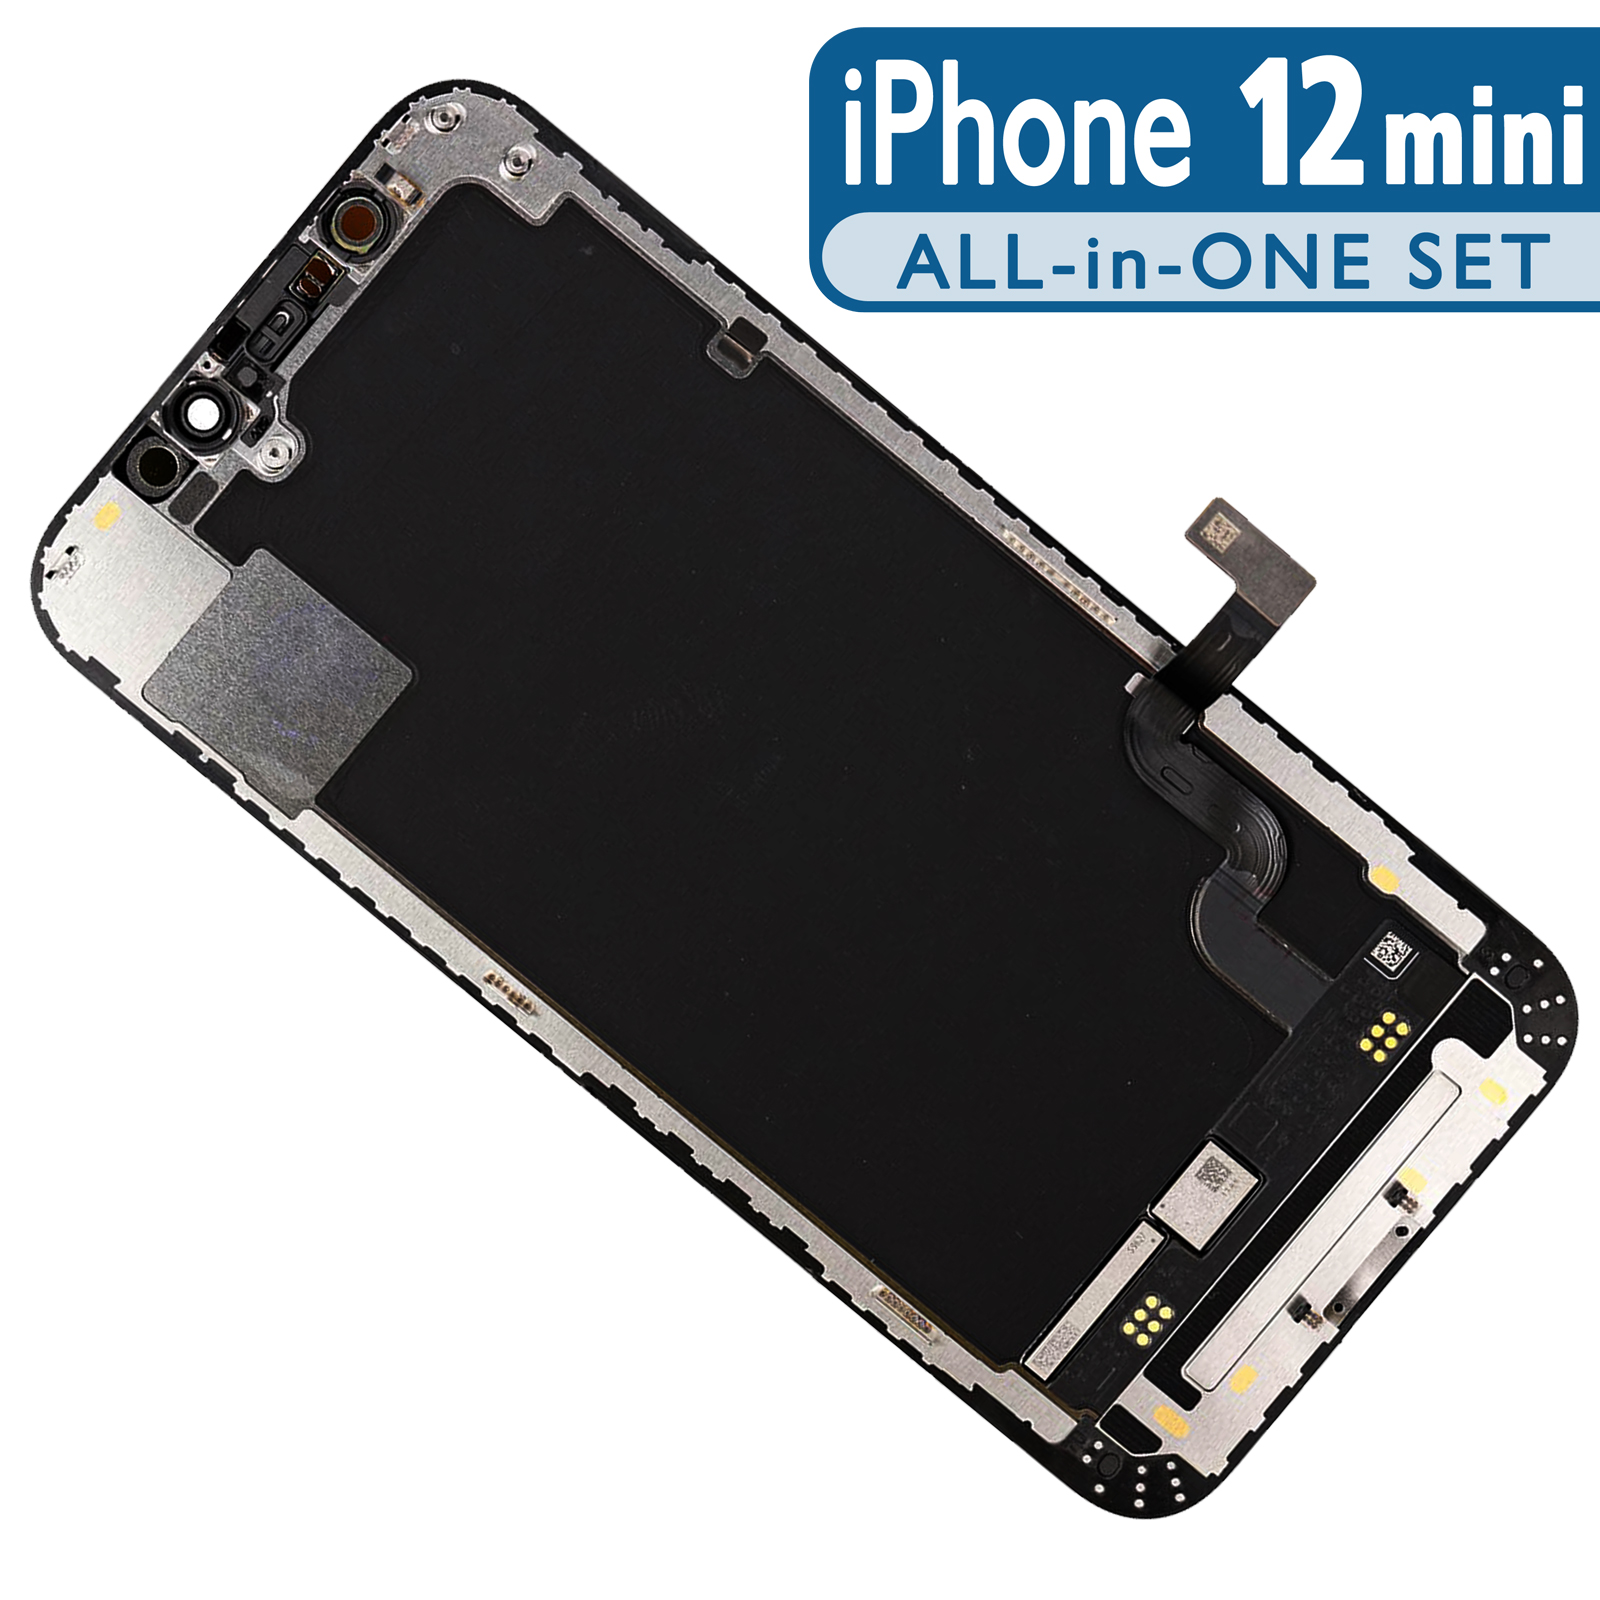 Display für iPhone 12 Mini in BASIC-HOLED-Qualität